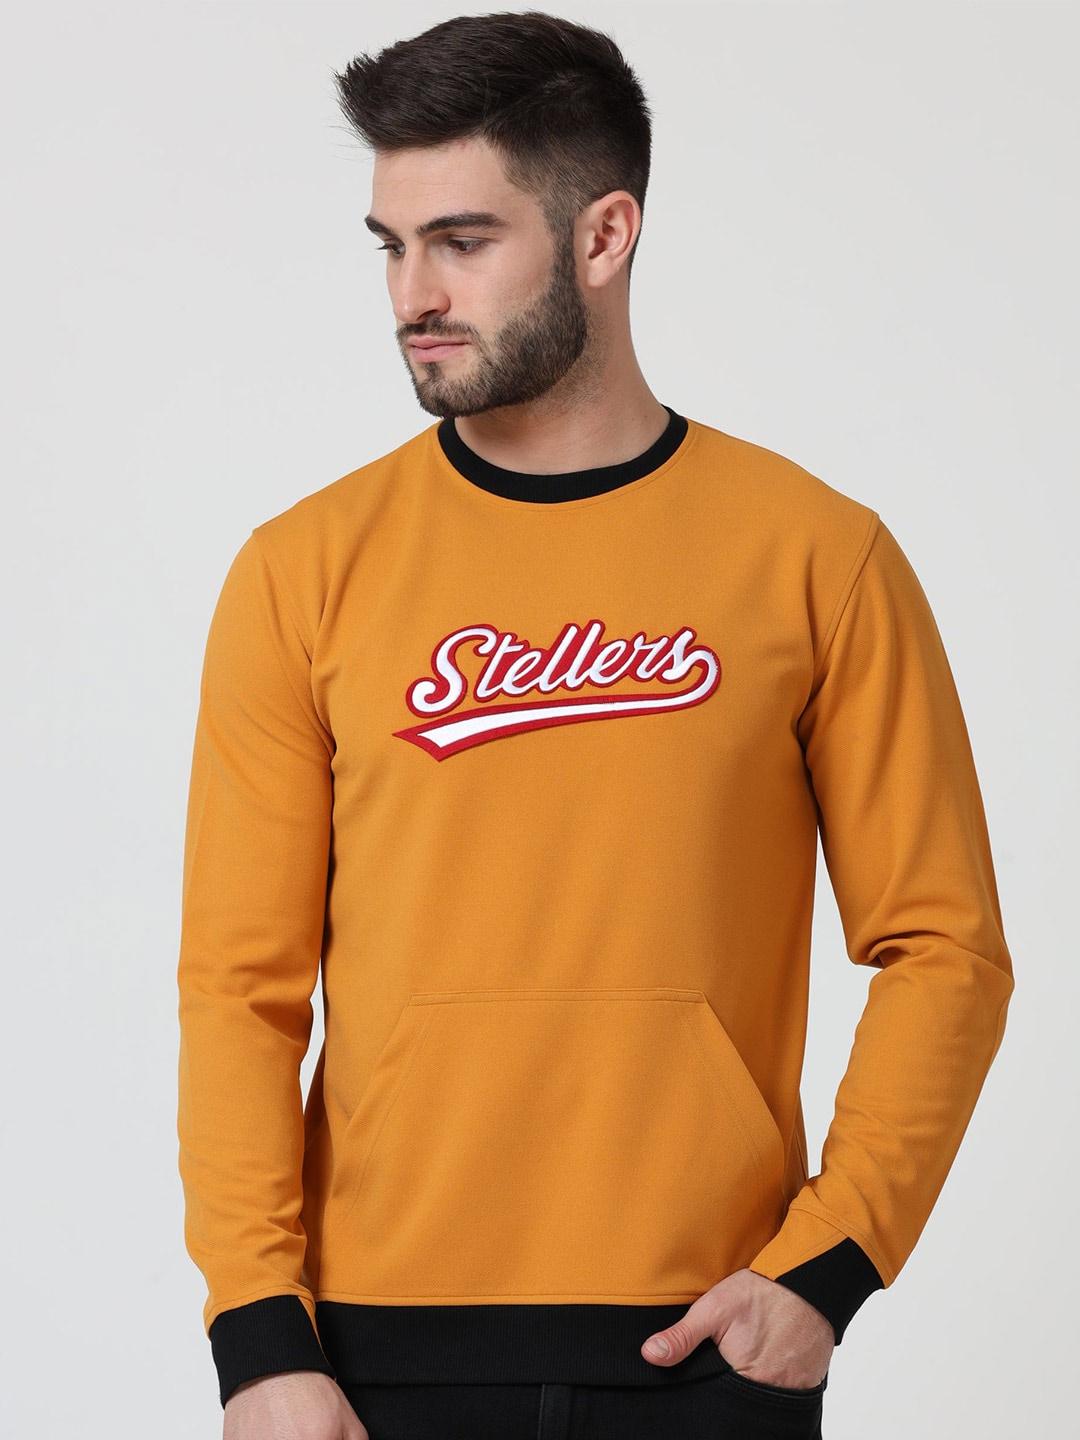 STELLERS Typography Print Full Sleeve Crew Neck Sweatshirt